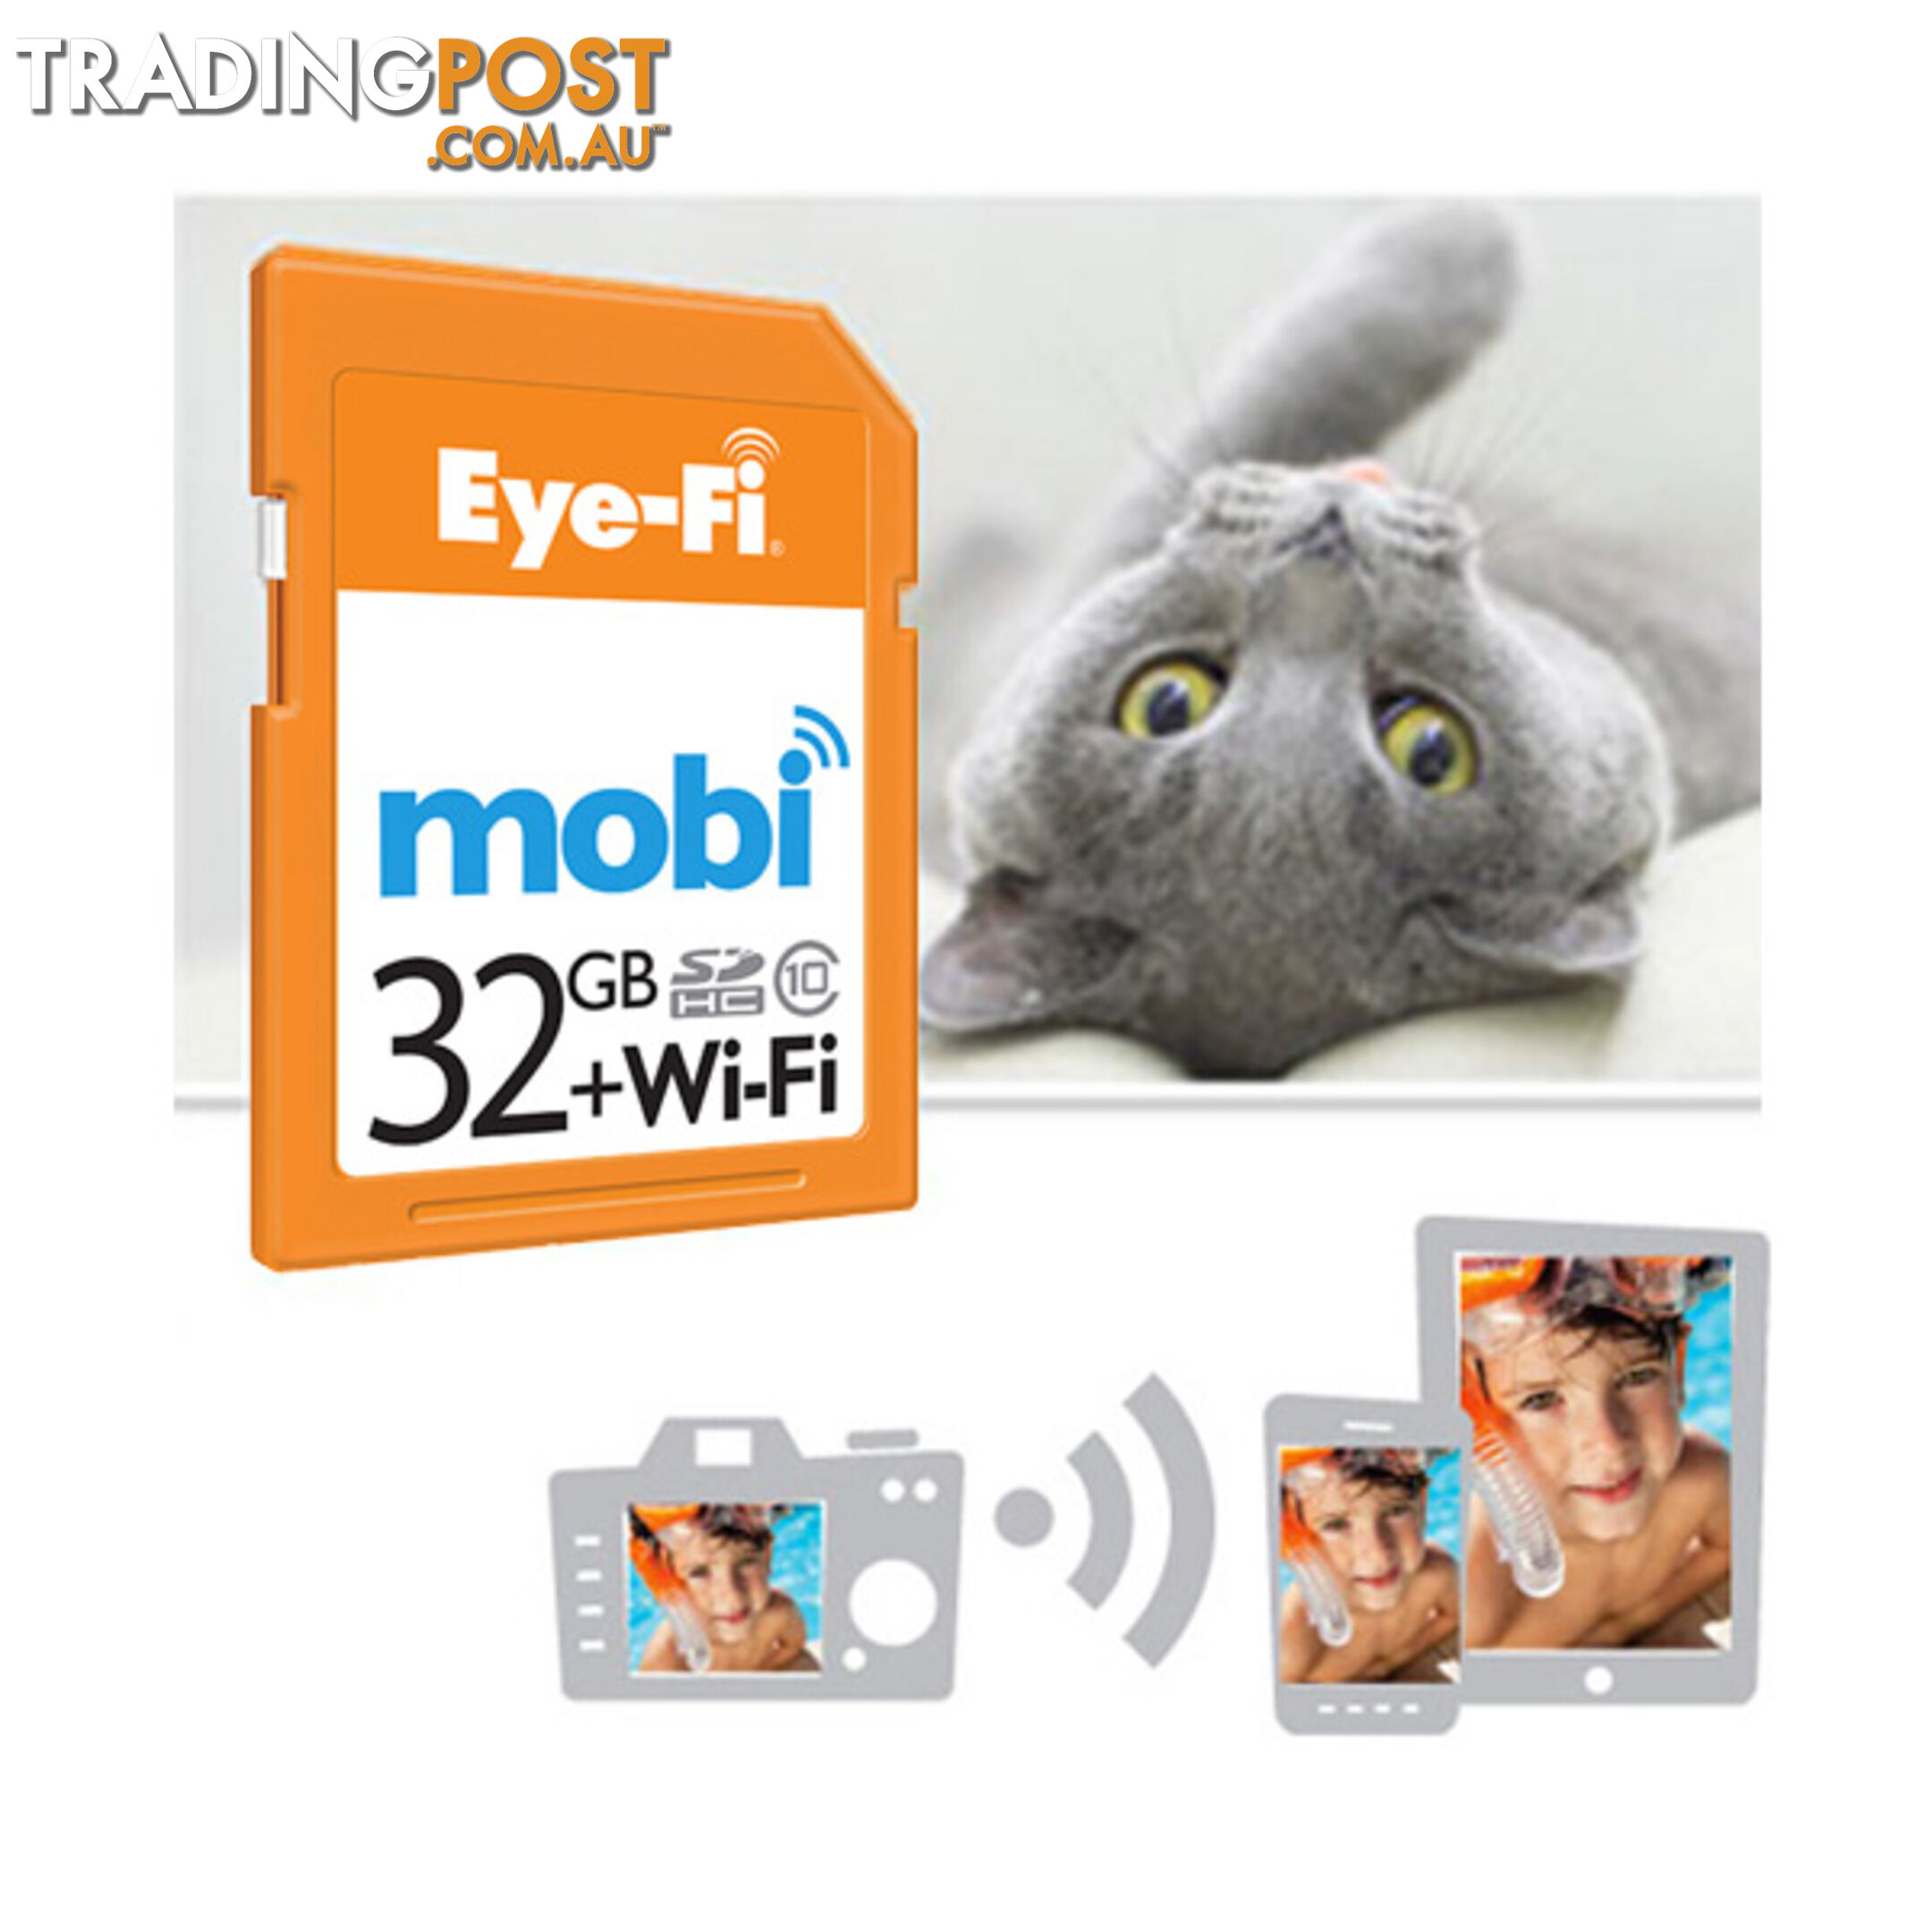 Eye-Fi Mobi 32GB WIFI SDHC Memory Card - Wireless Photo & Video Uploads